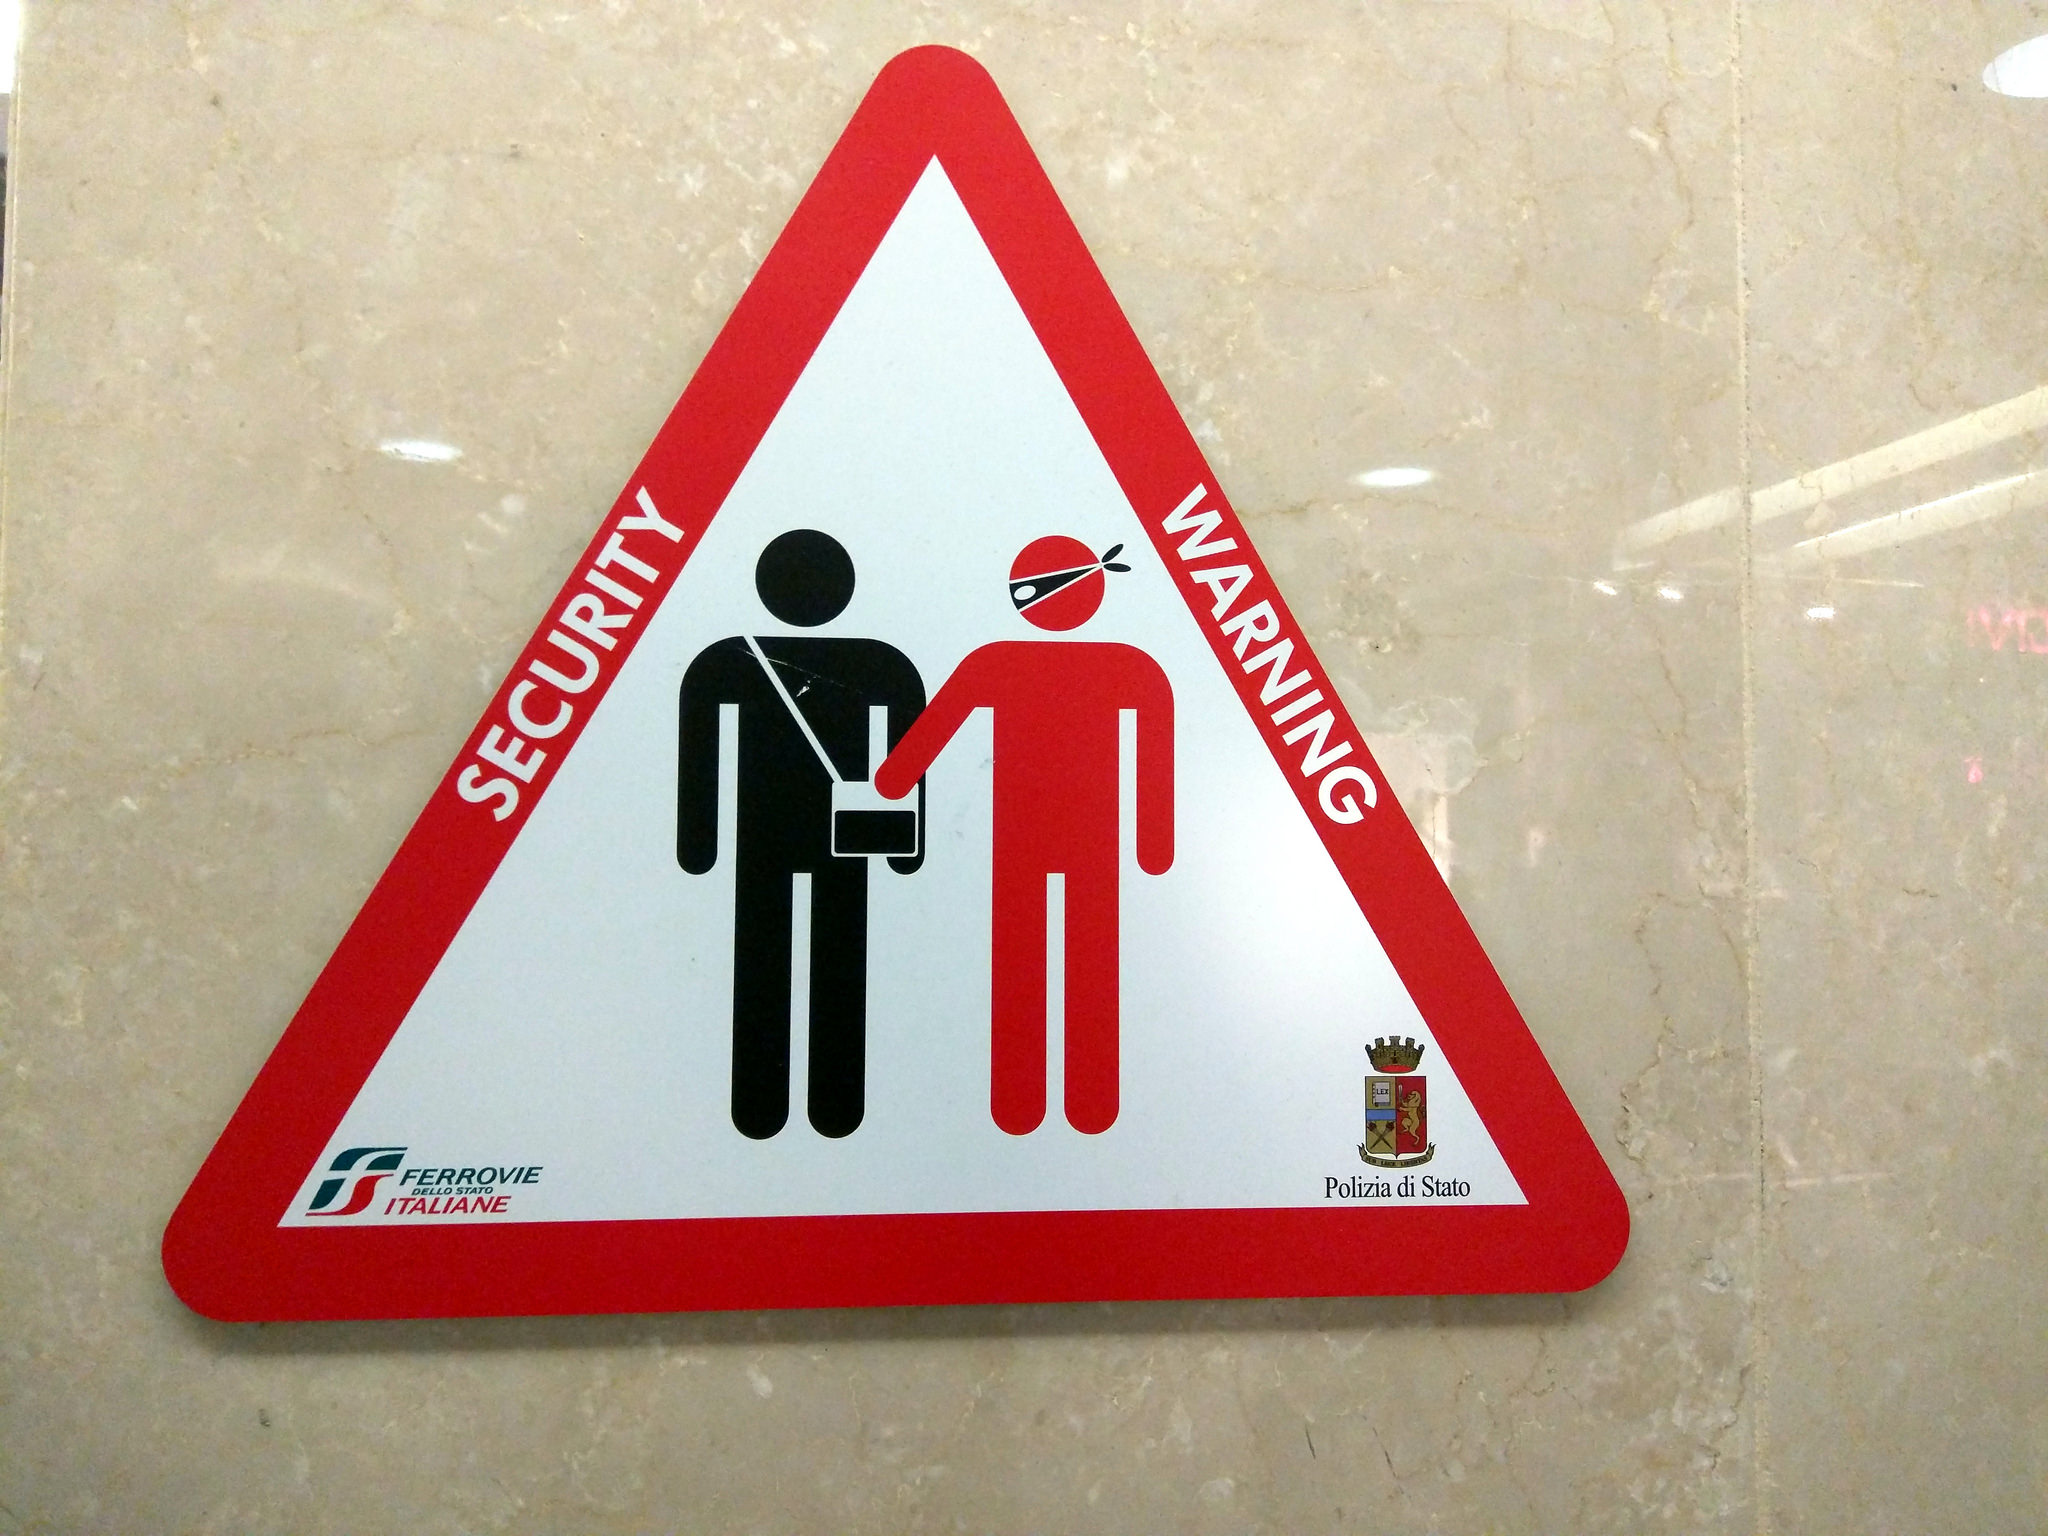 Pickpocket warning sign, train station, Turin, Italy